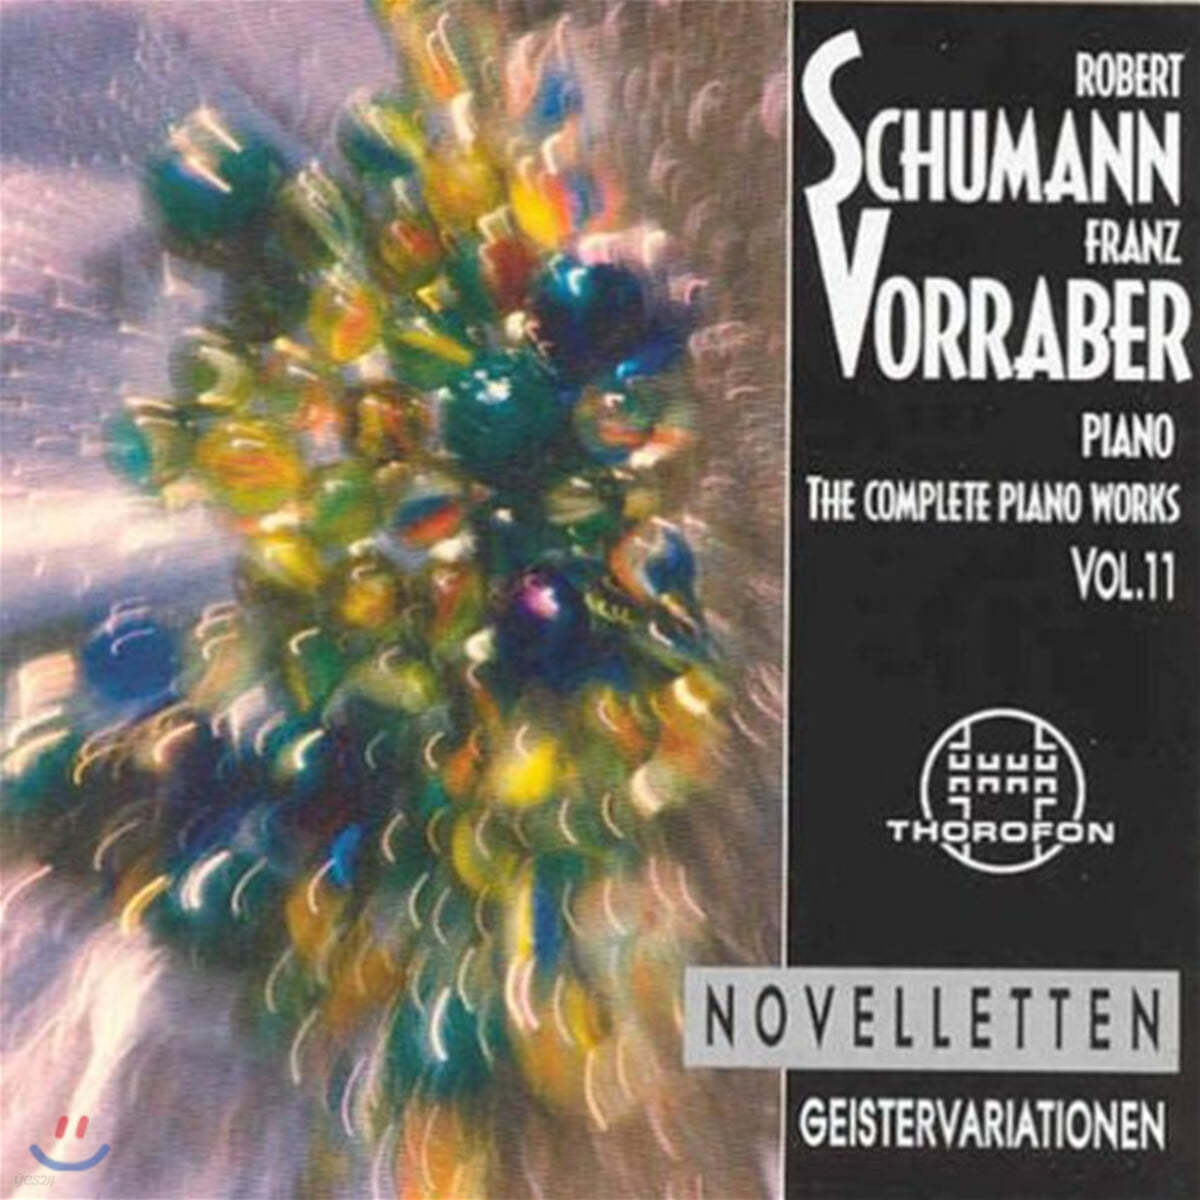 Franz Vorraber 슈만: 피아노 작품 전집 11집 (Schumann : The Complete Piano Works Vol. 11) 